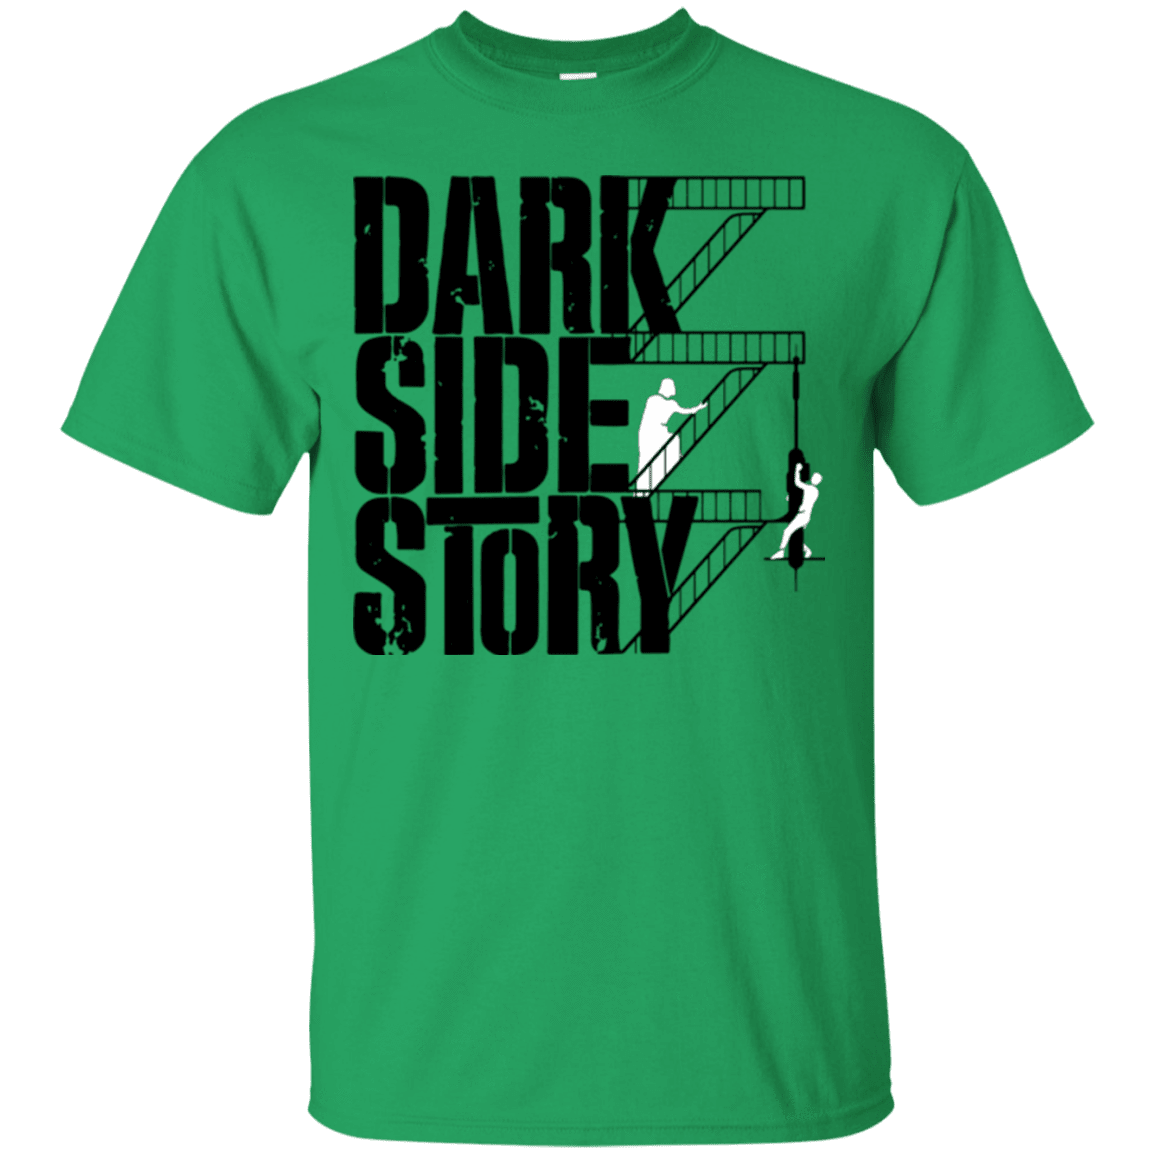 T-Shirts Irish Green / Small DARKSIDE STORY T-Shirt